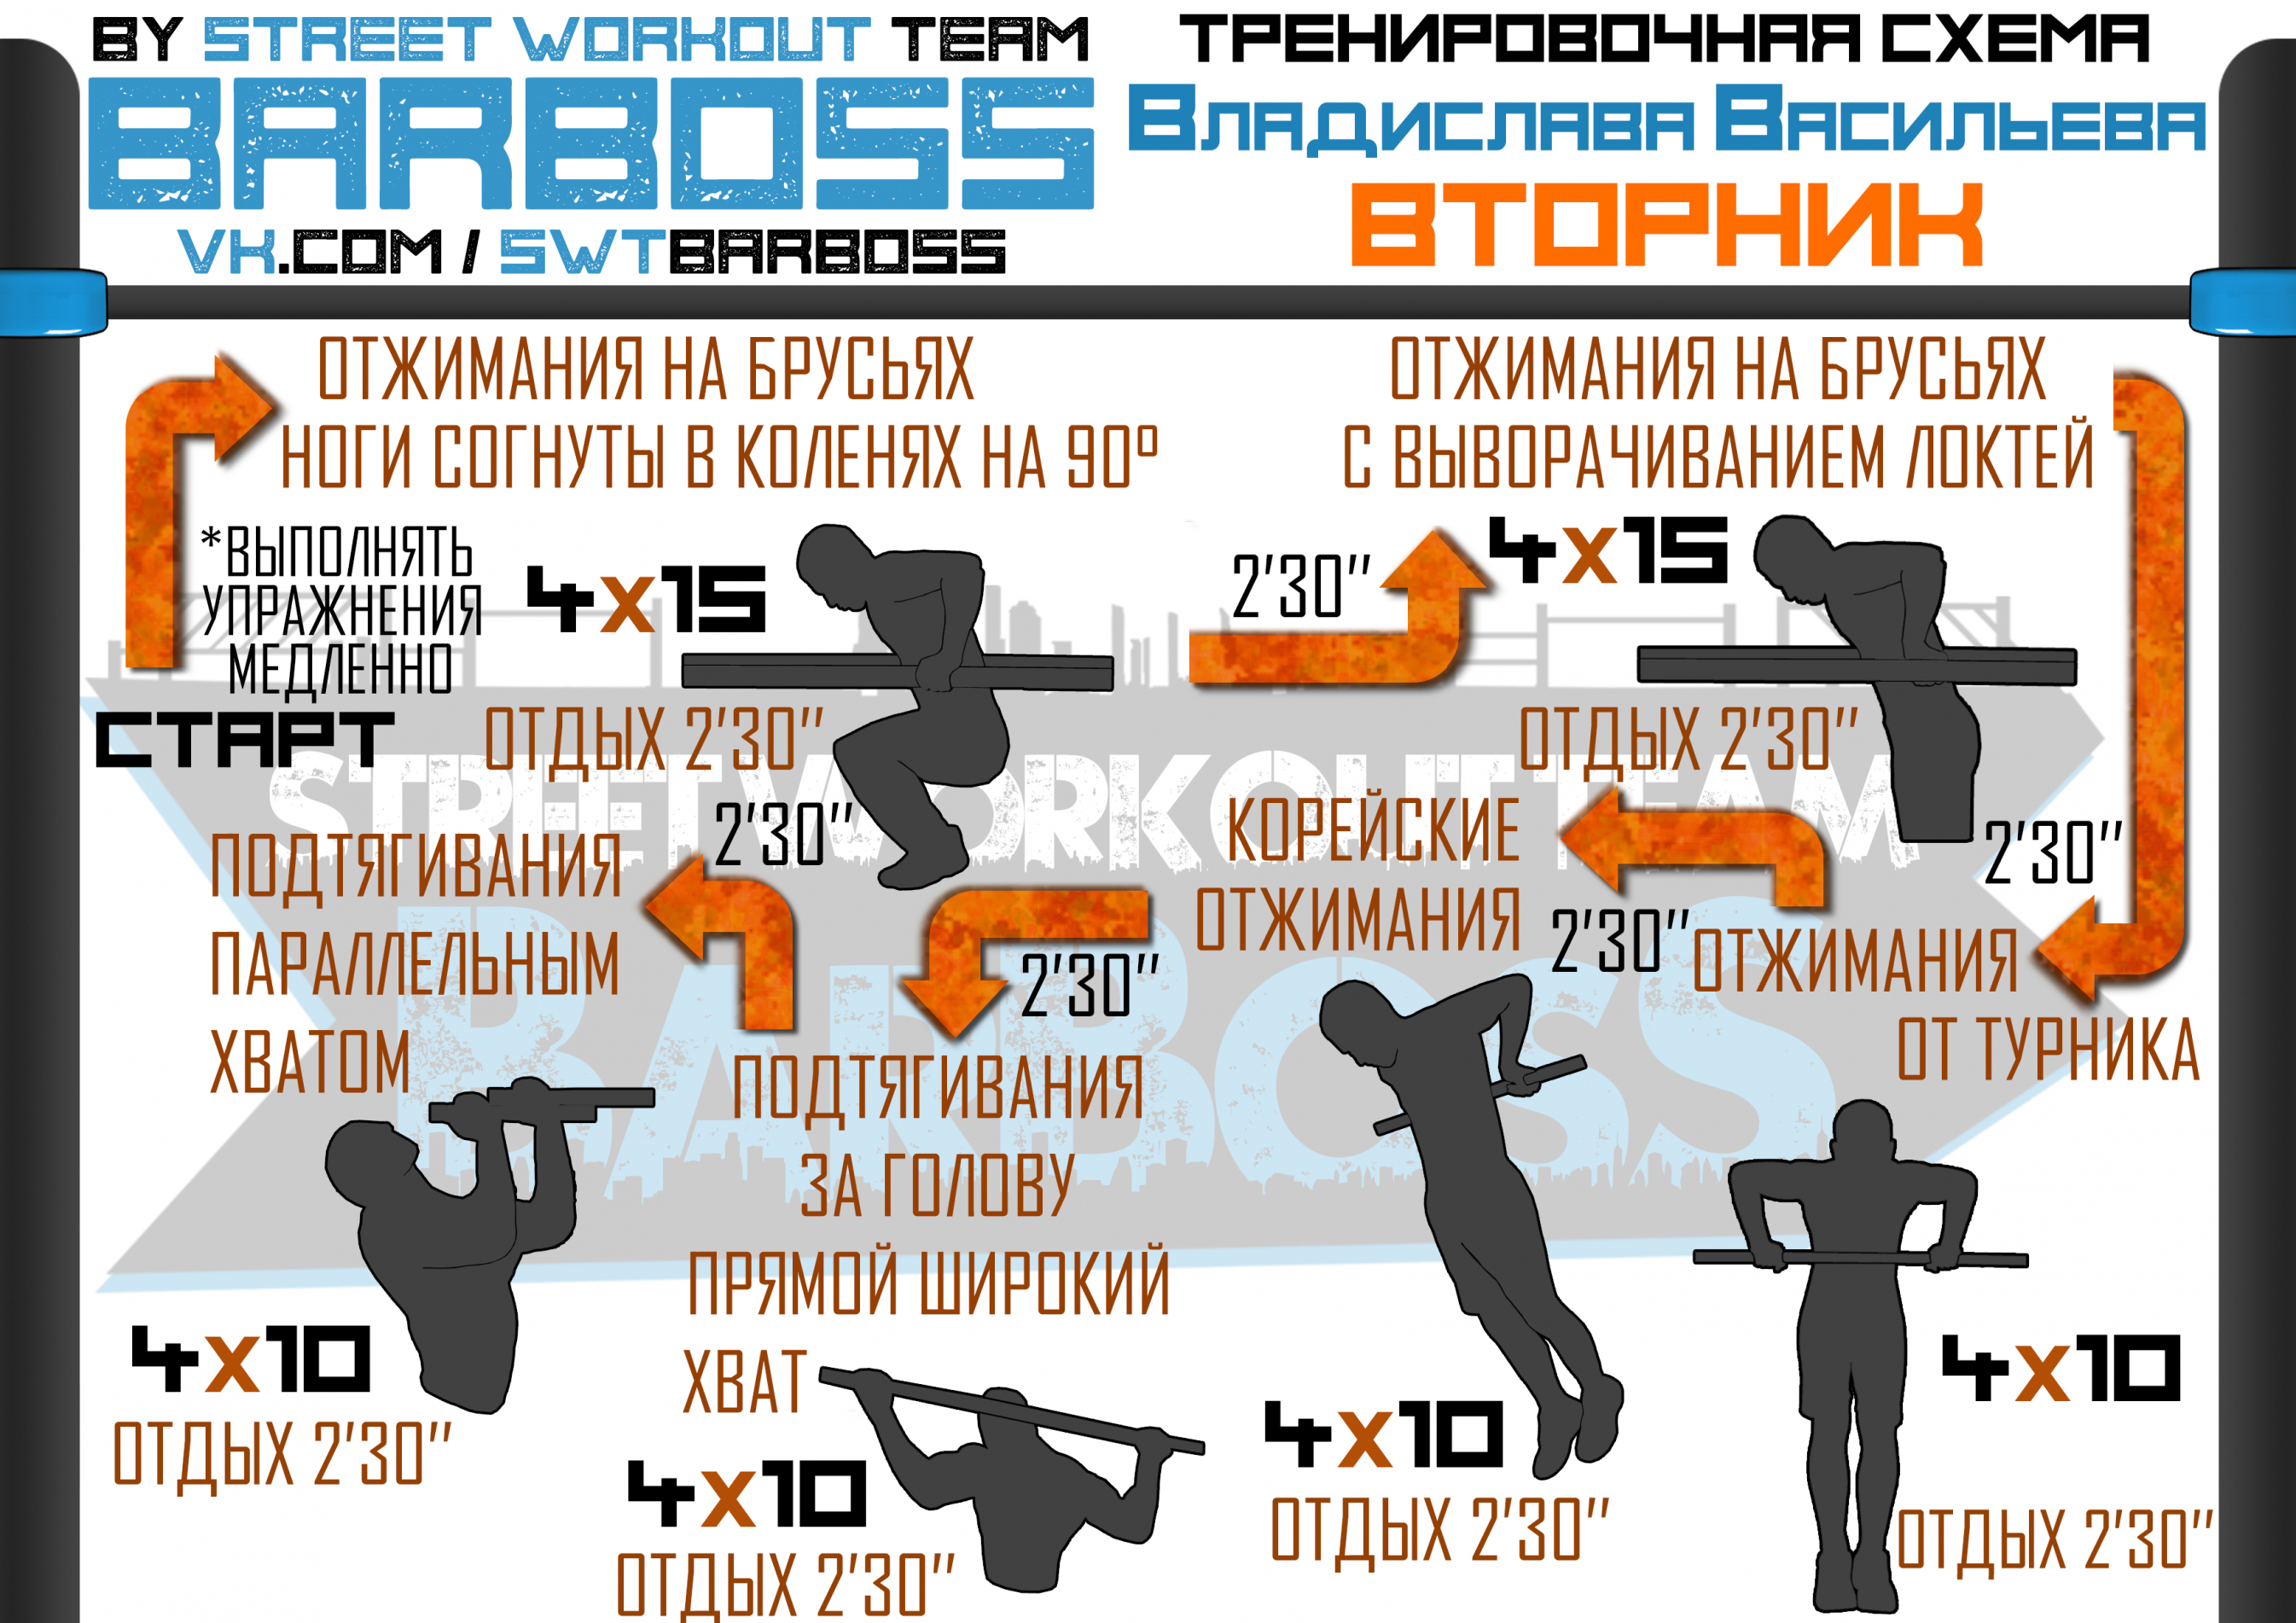 Программа тренировок на неделю от Владислава Васильева